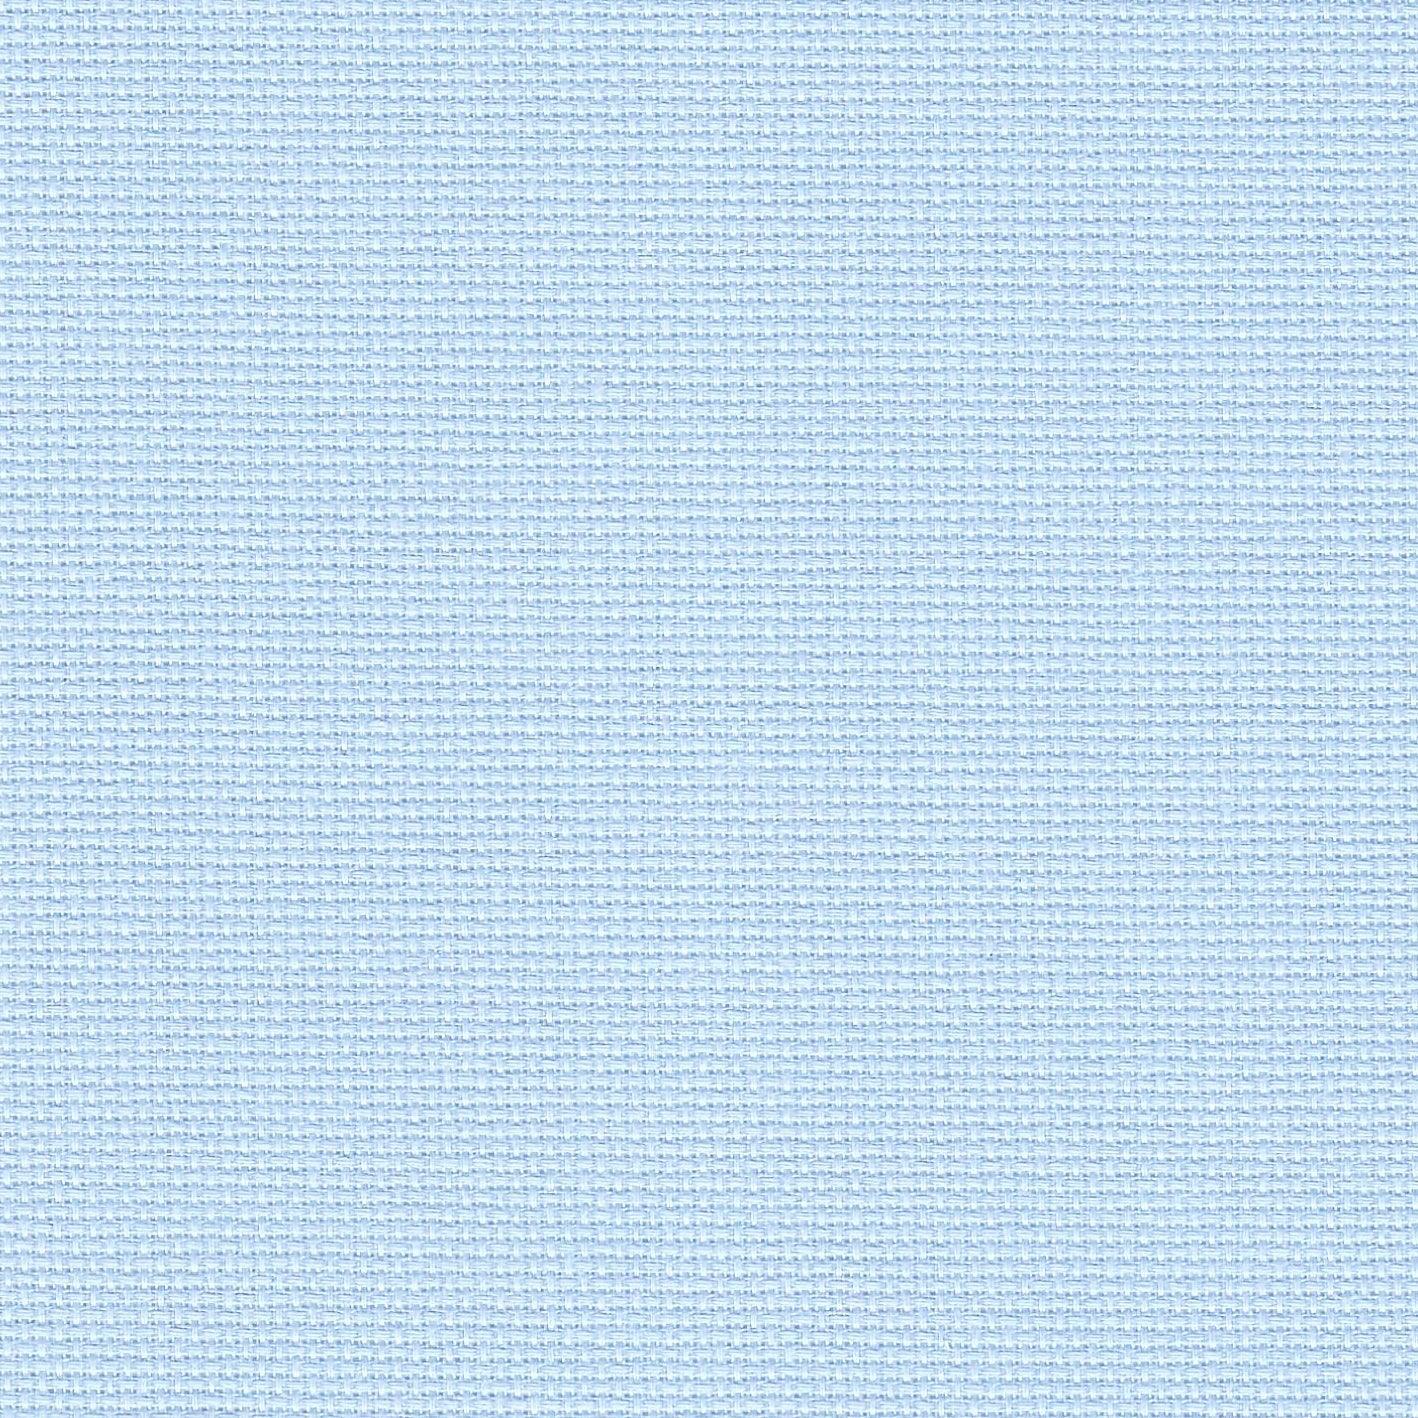 Fein-Aida 18 Count Zweigart Needlework Fabric Color 503 Light Blue - Luca-S Fabric